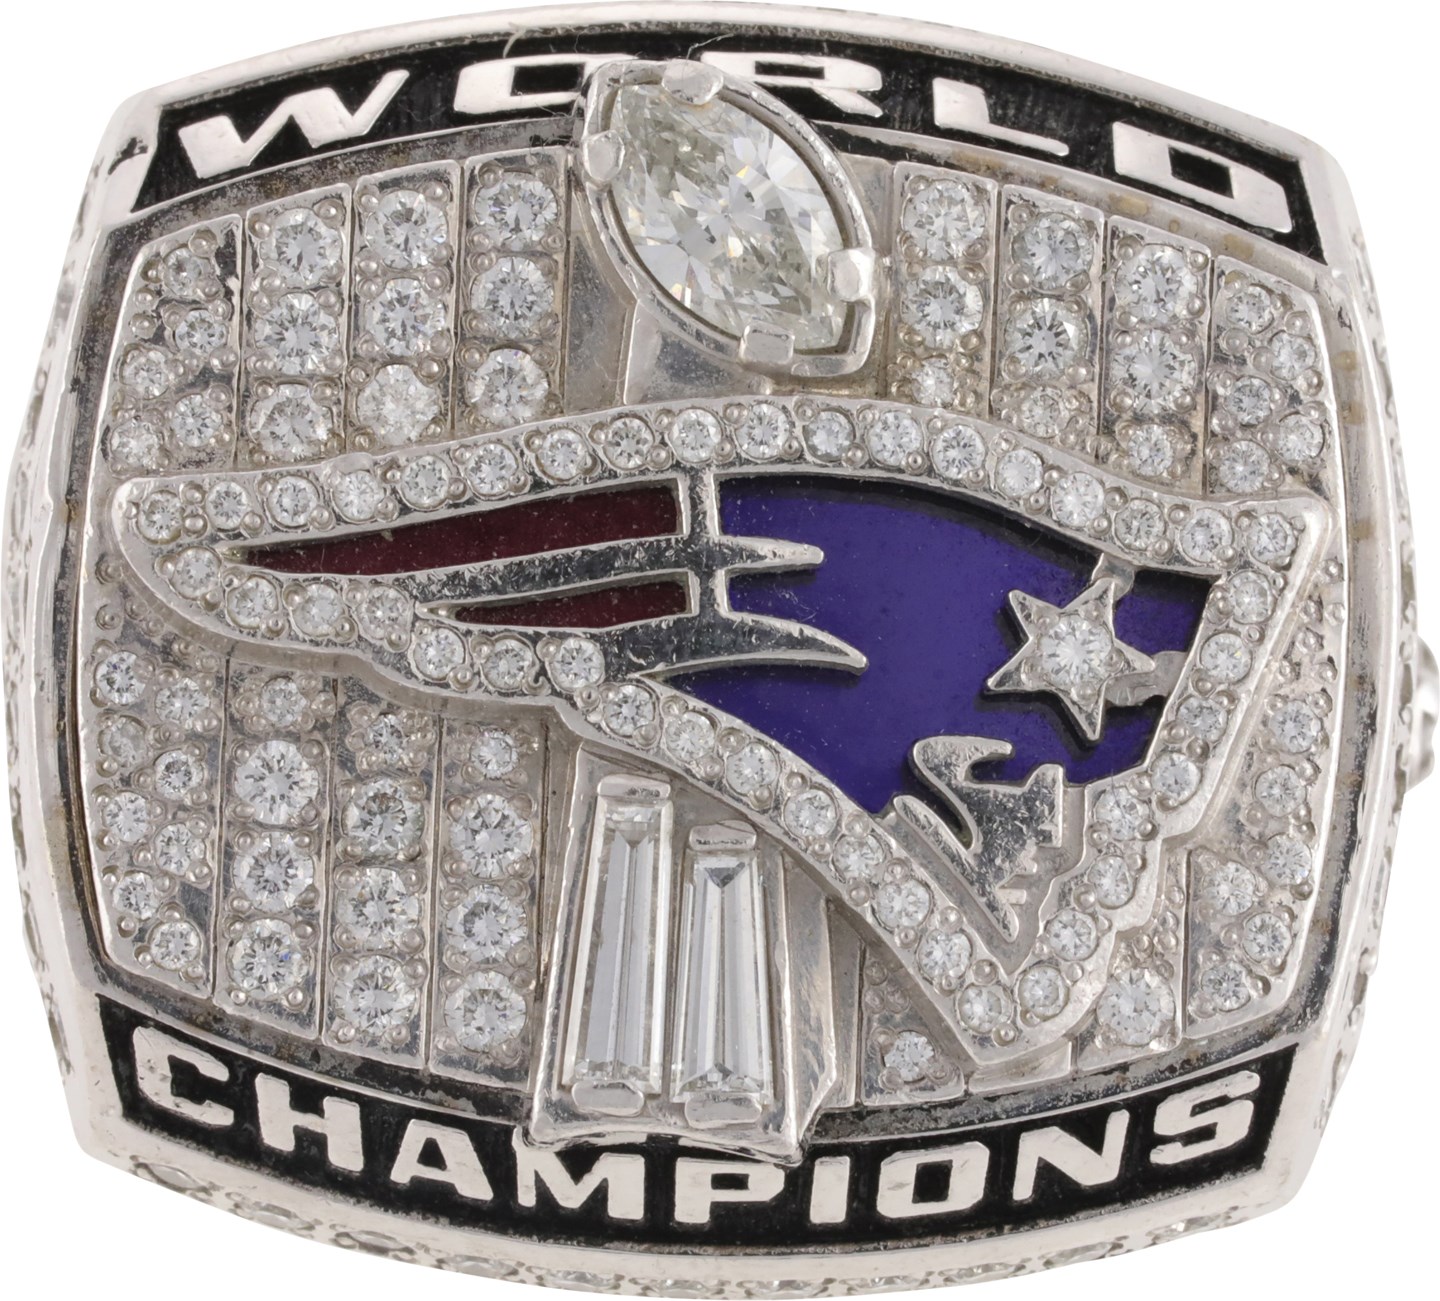 - 001 New England Patriots Super Bowl XXXVI Championship Ring Presented to Player Je'Rod Cherry